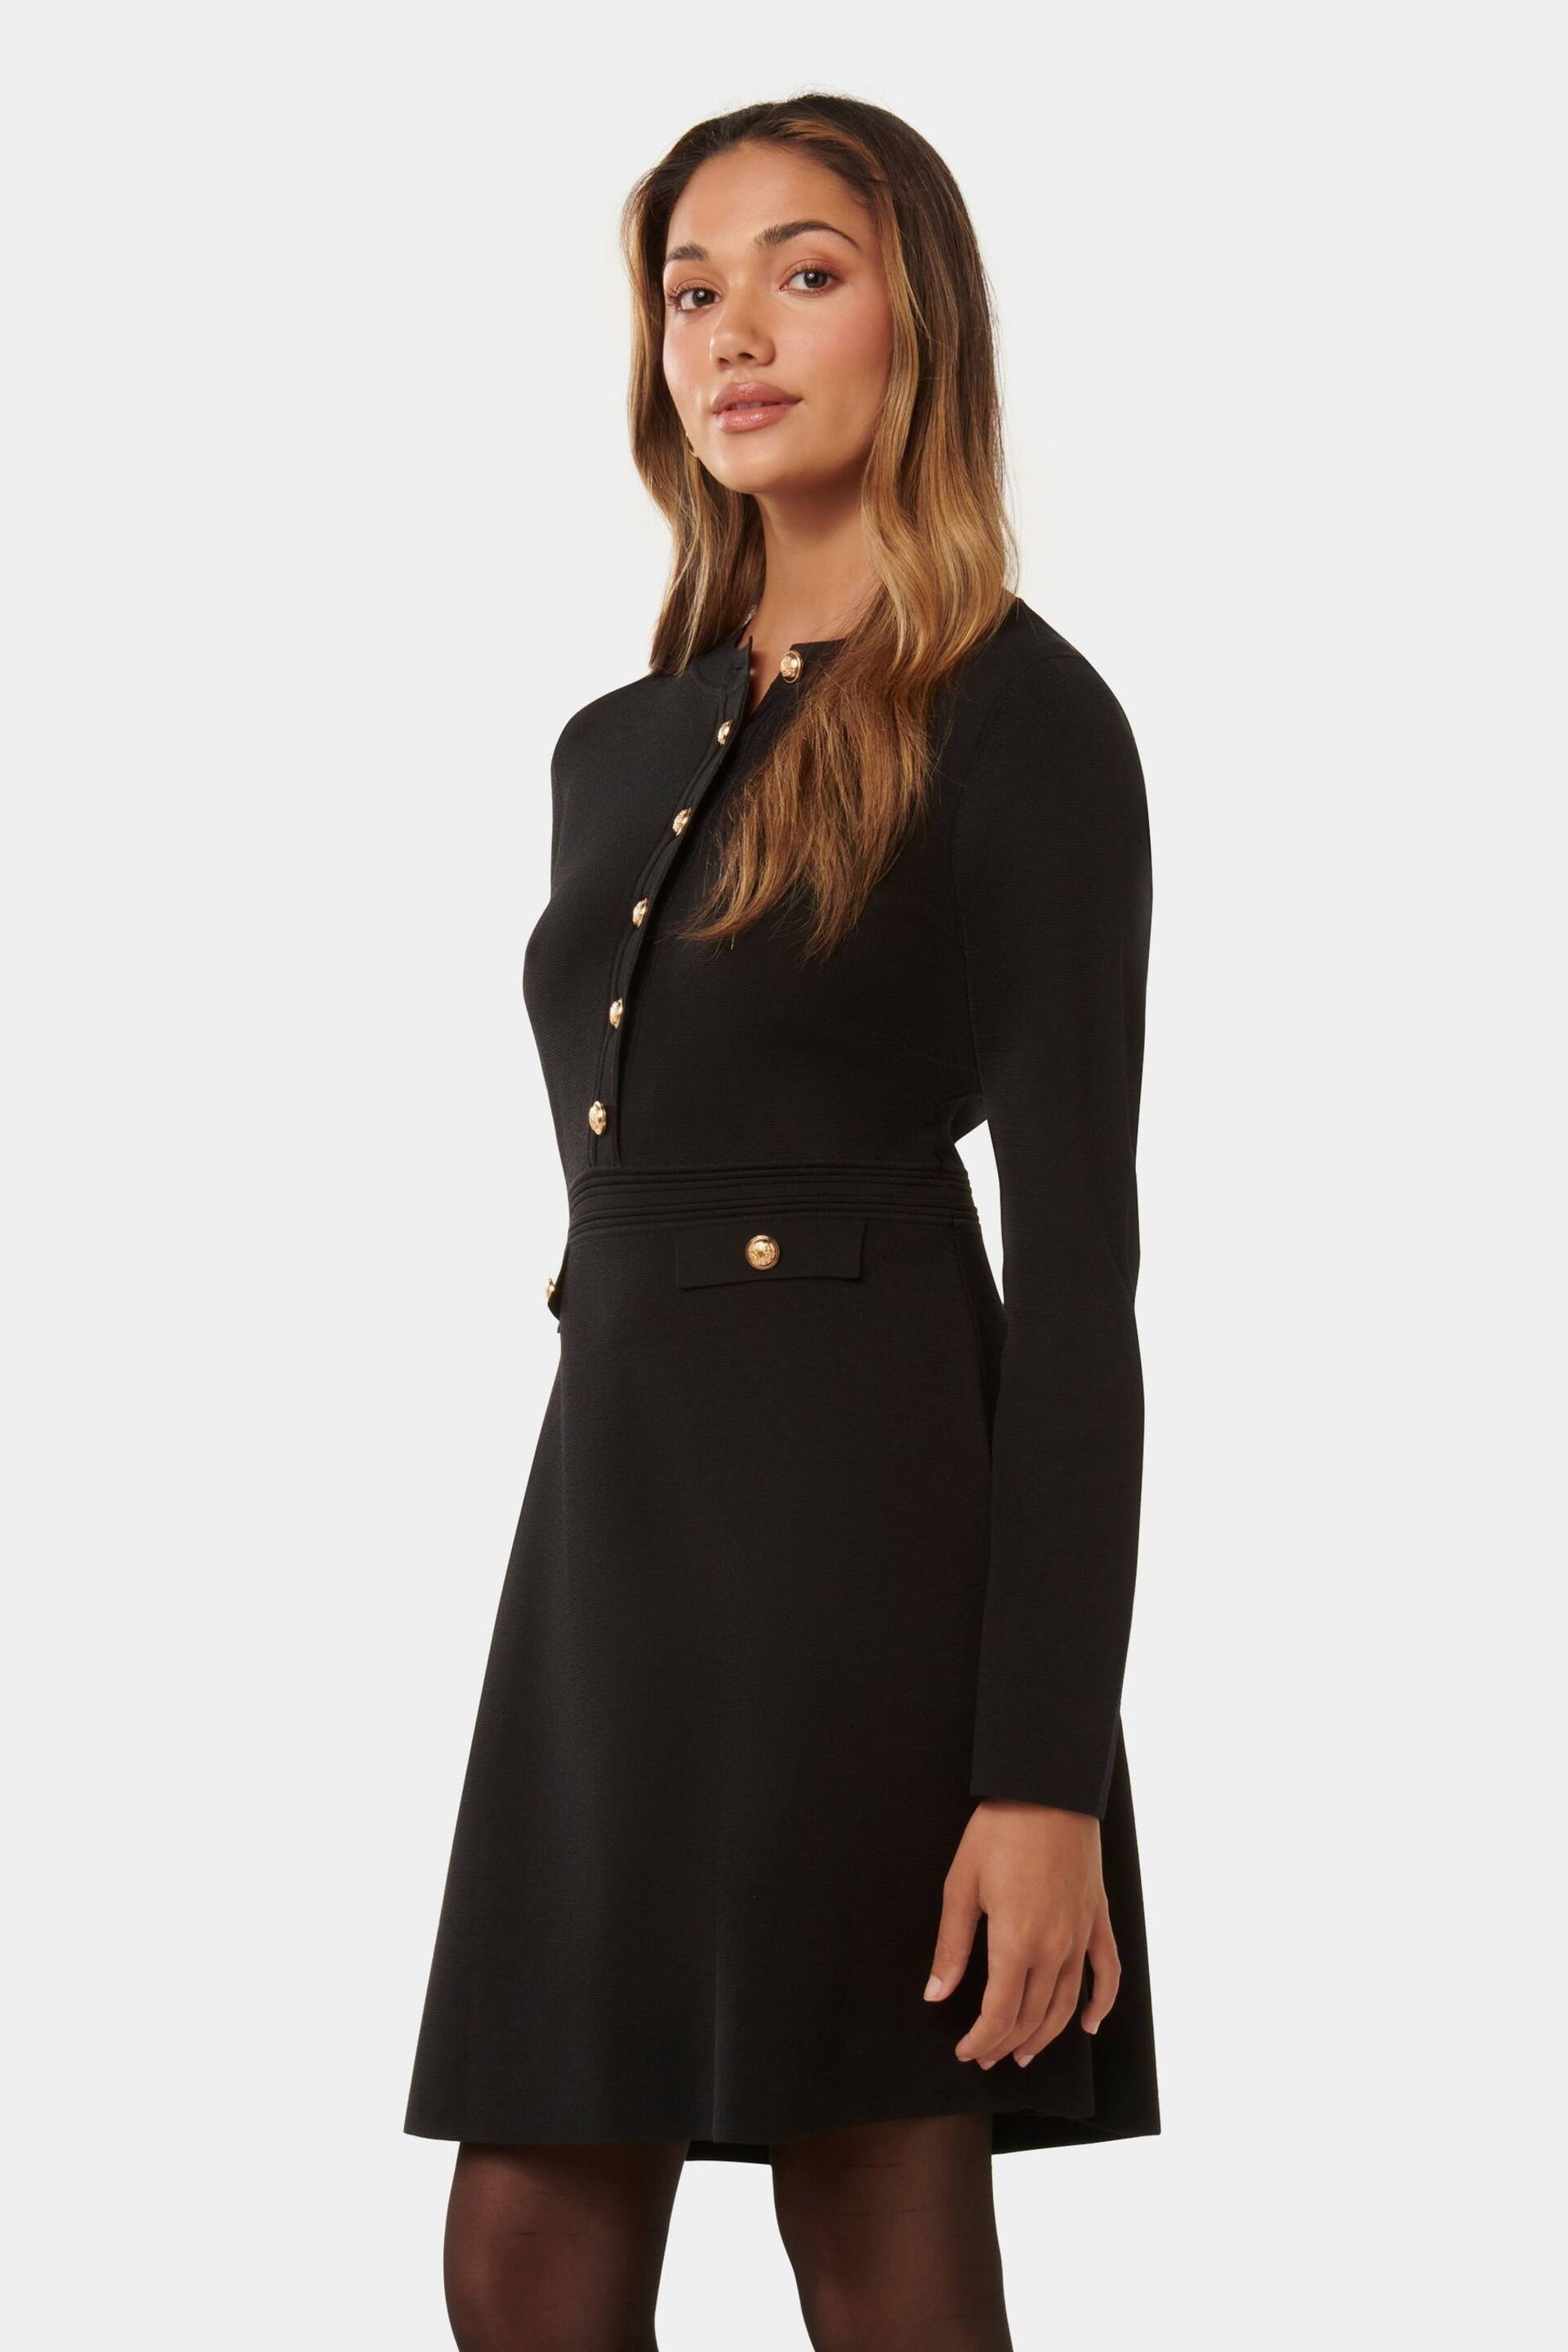 Forever New Black Karina Petite Long Sleeves Polo Knit Dress - Image 4 of 5